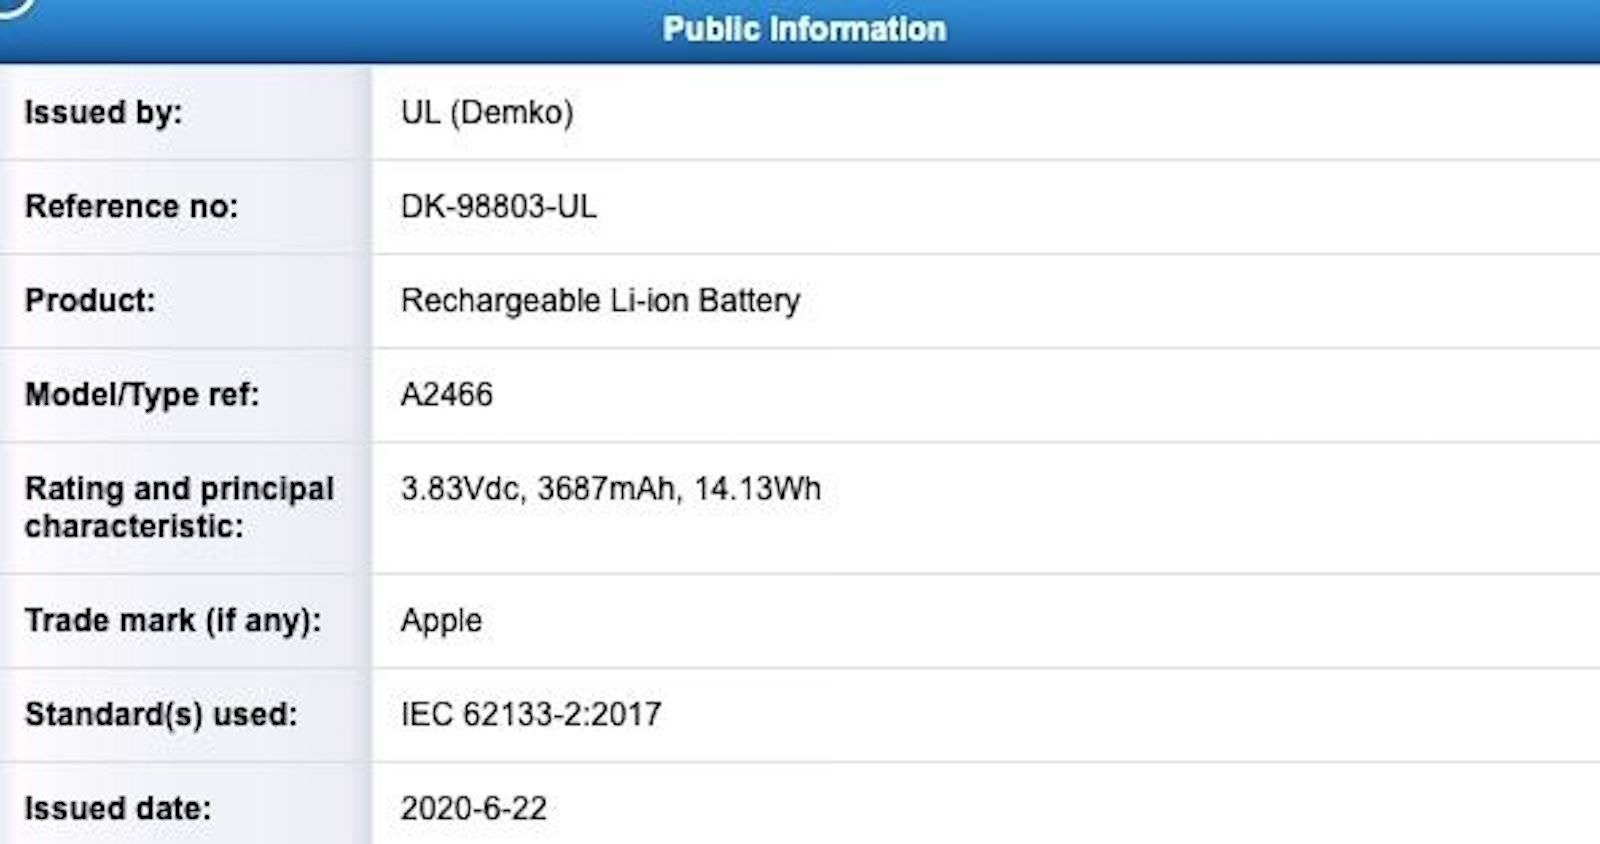 Apple A2466 UL Demko